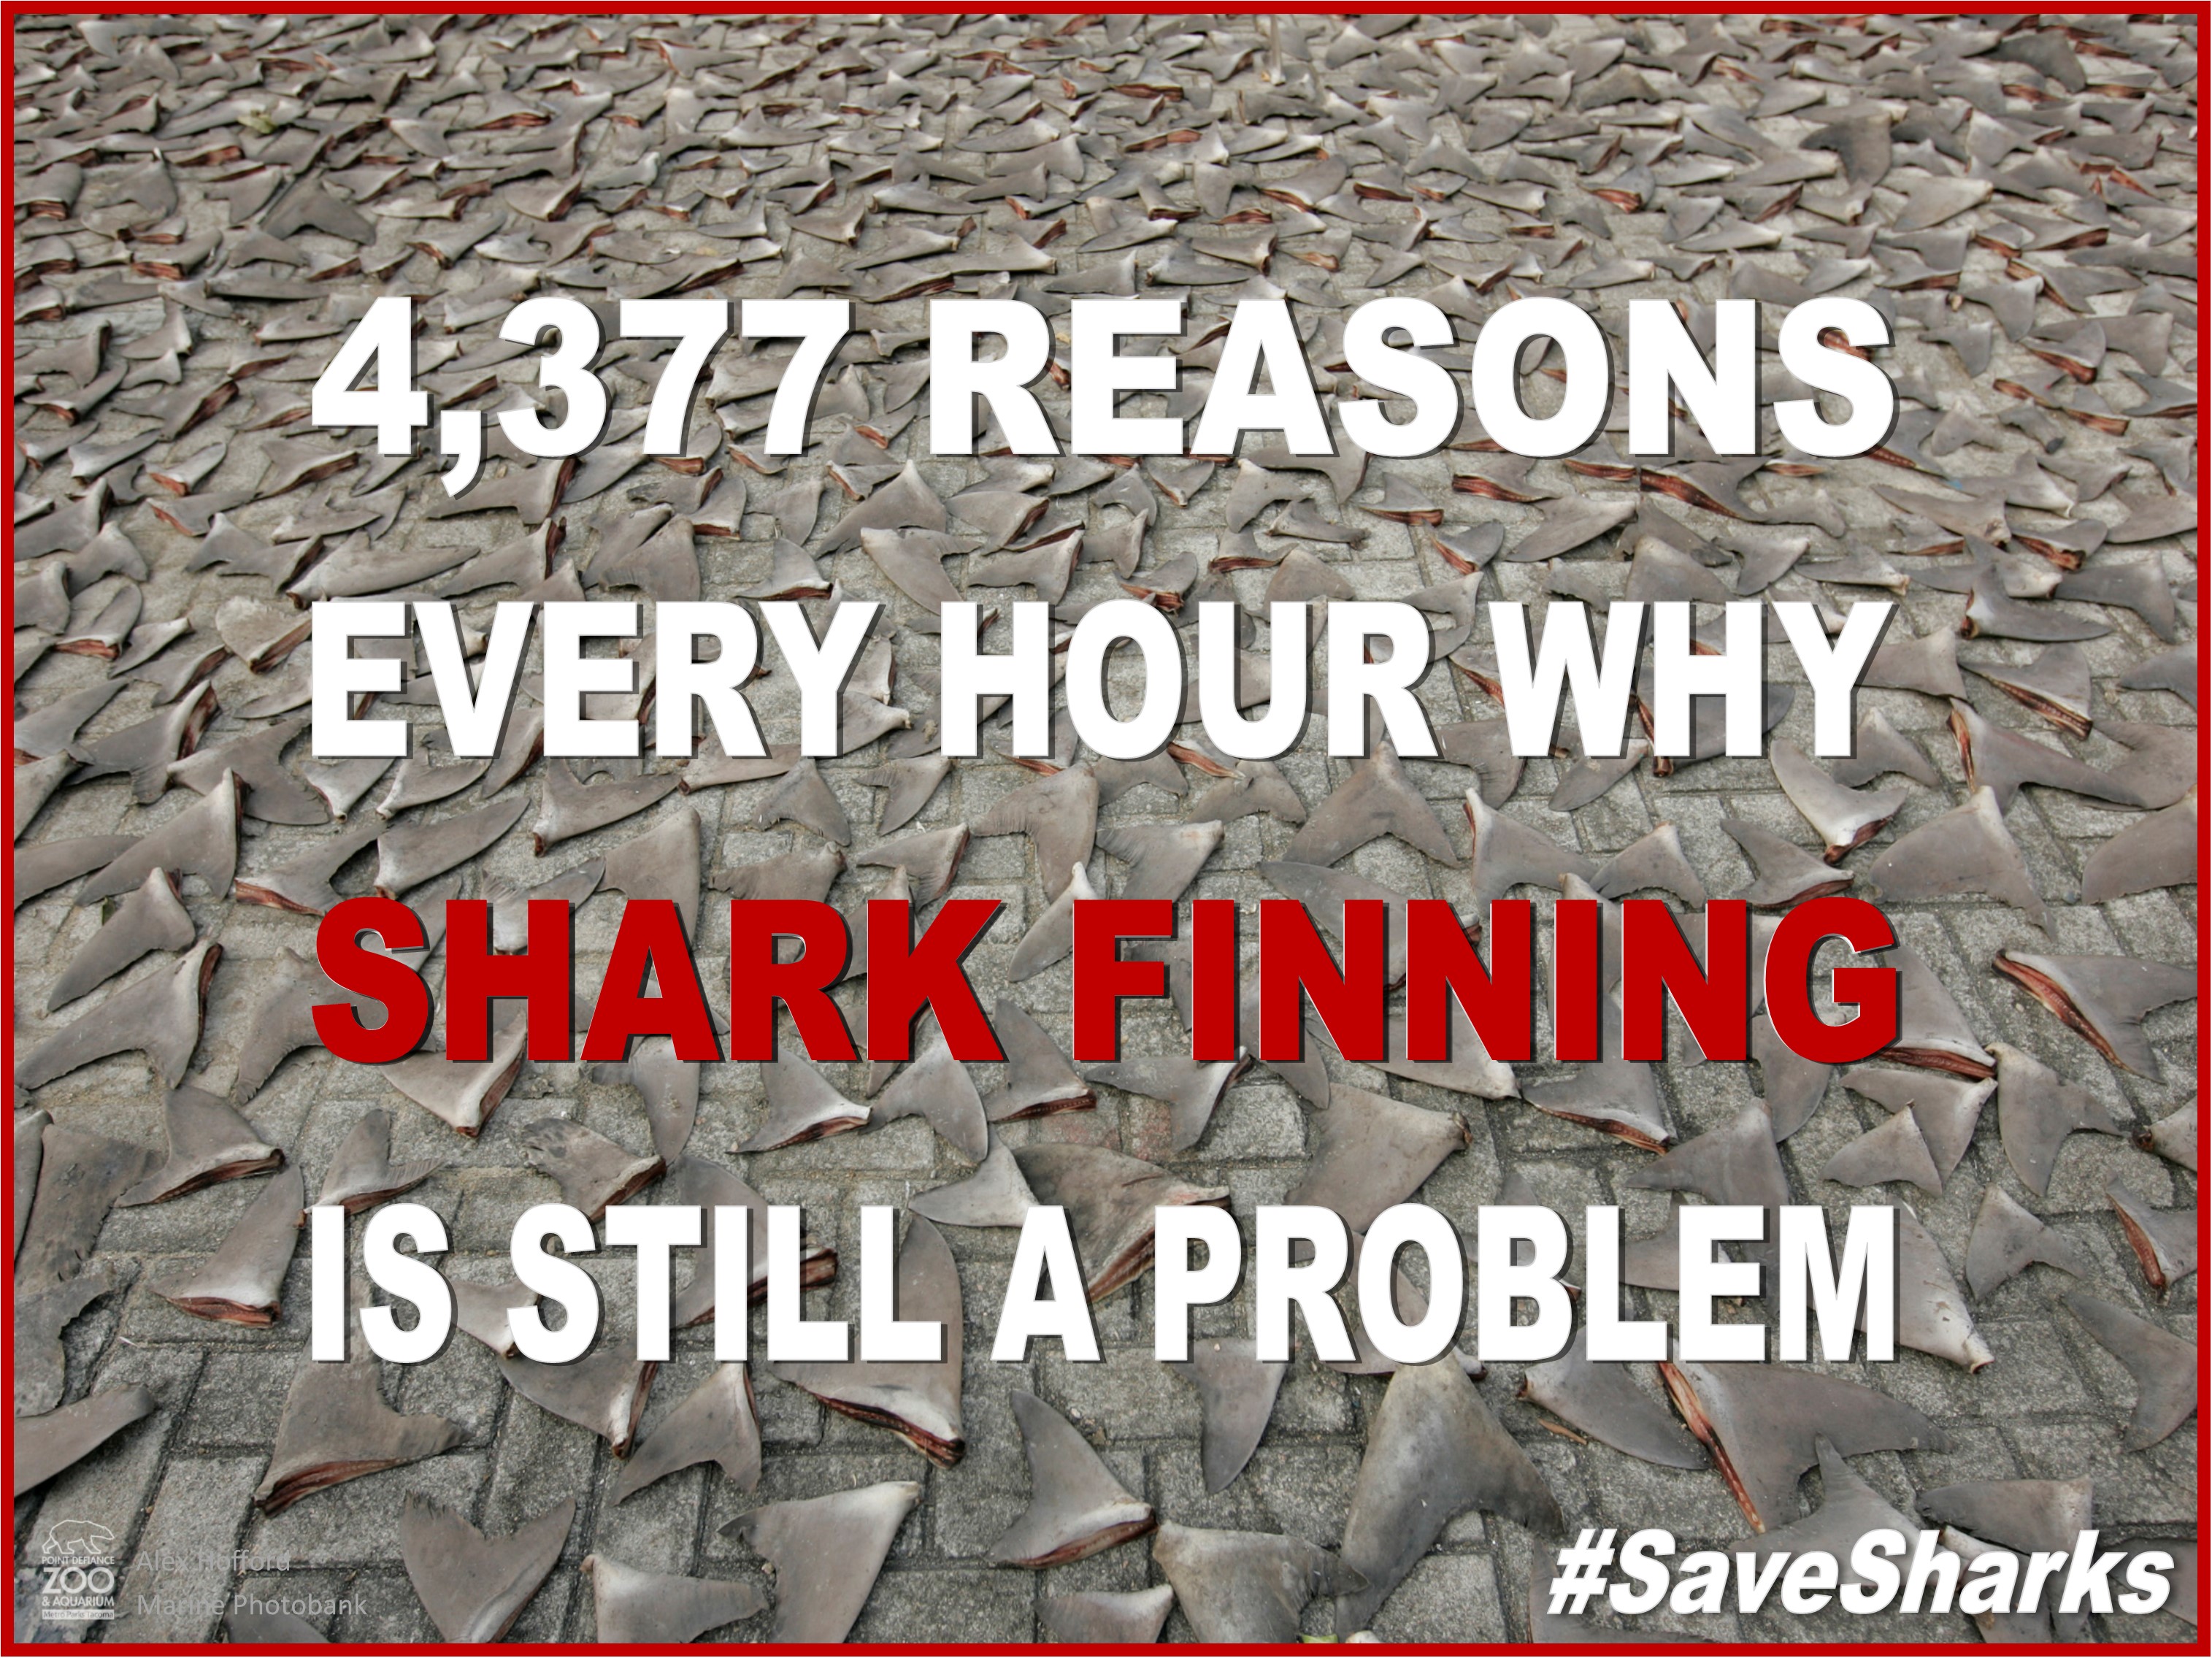 7 Reasons To Ban Shark Finning